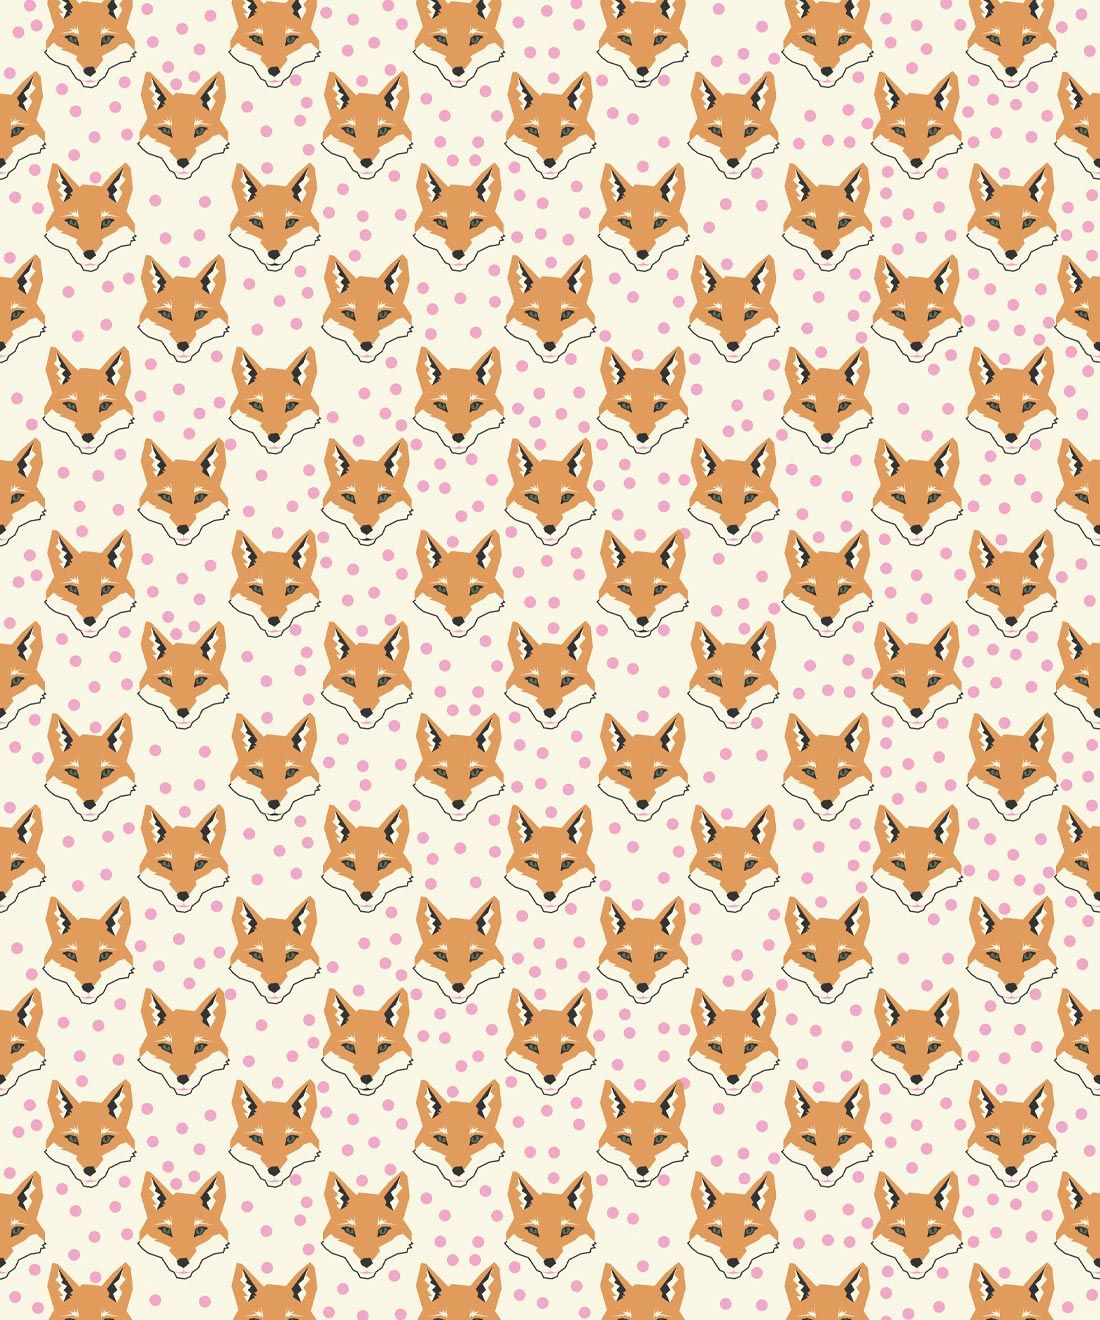 Foxes Wallpaper